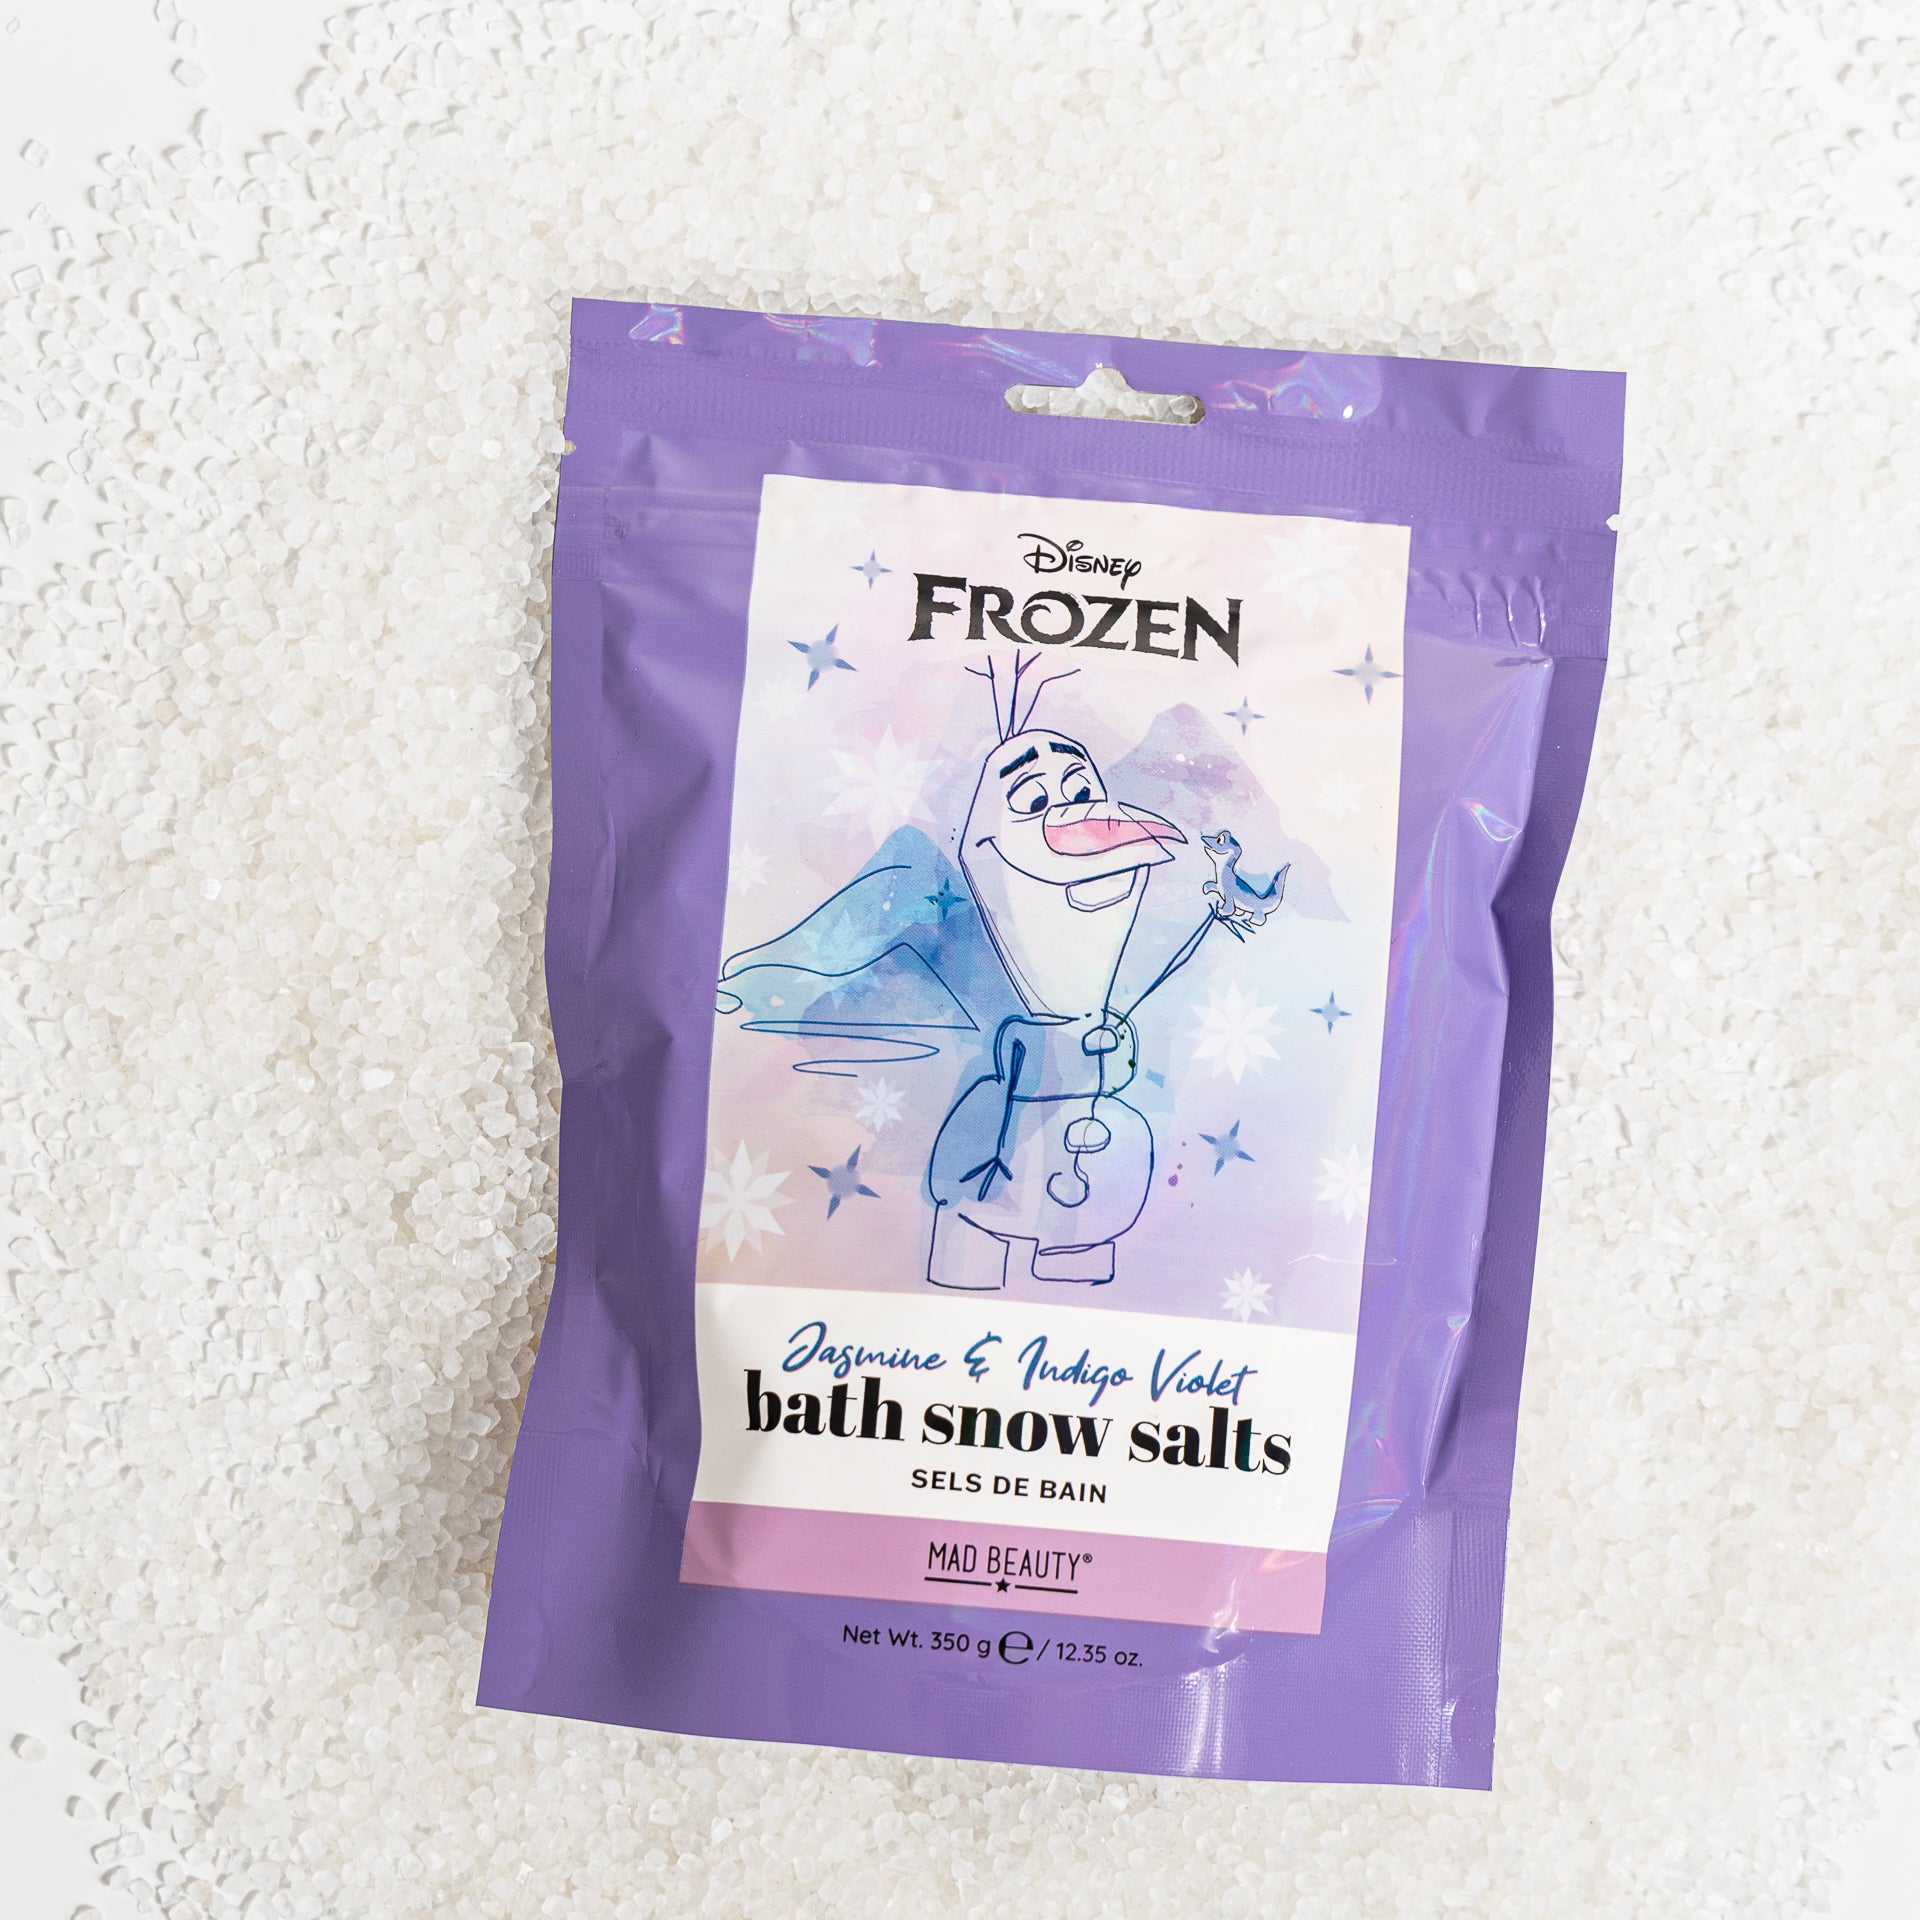 Disney's Frozen – Olaf's Bath Snow Salts